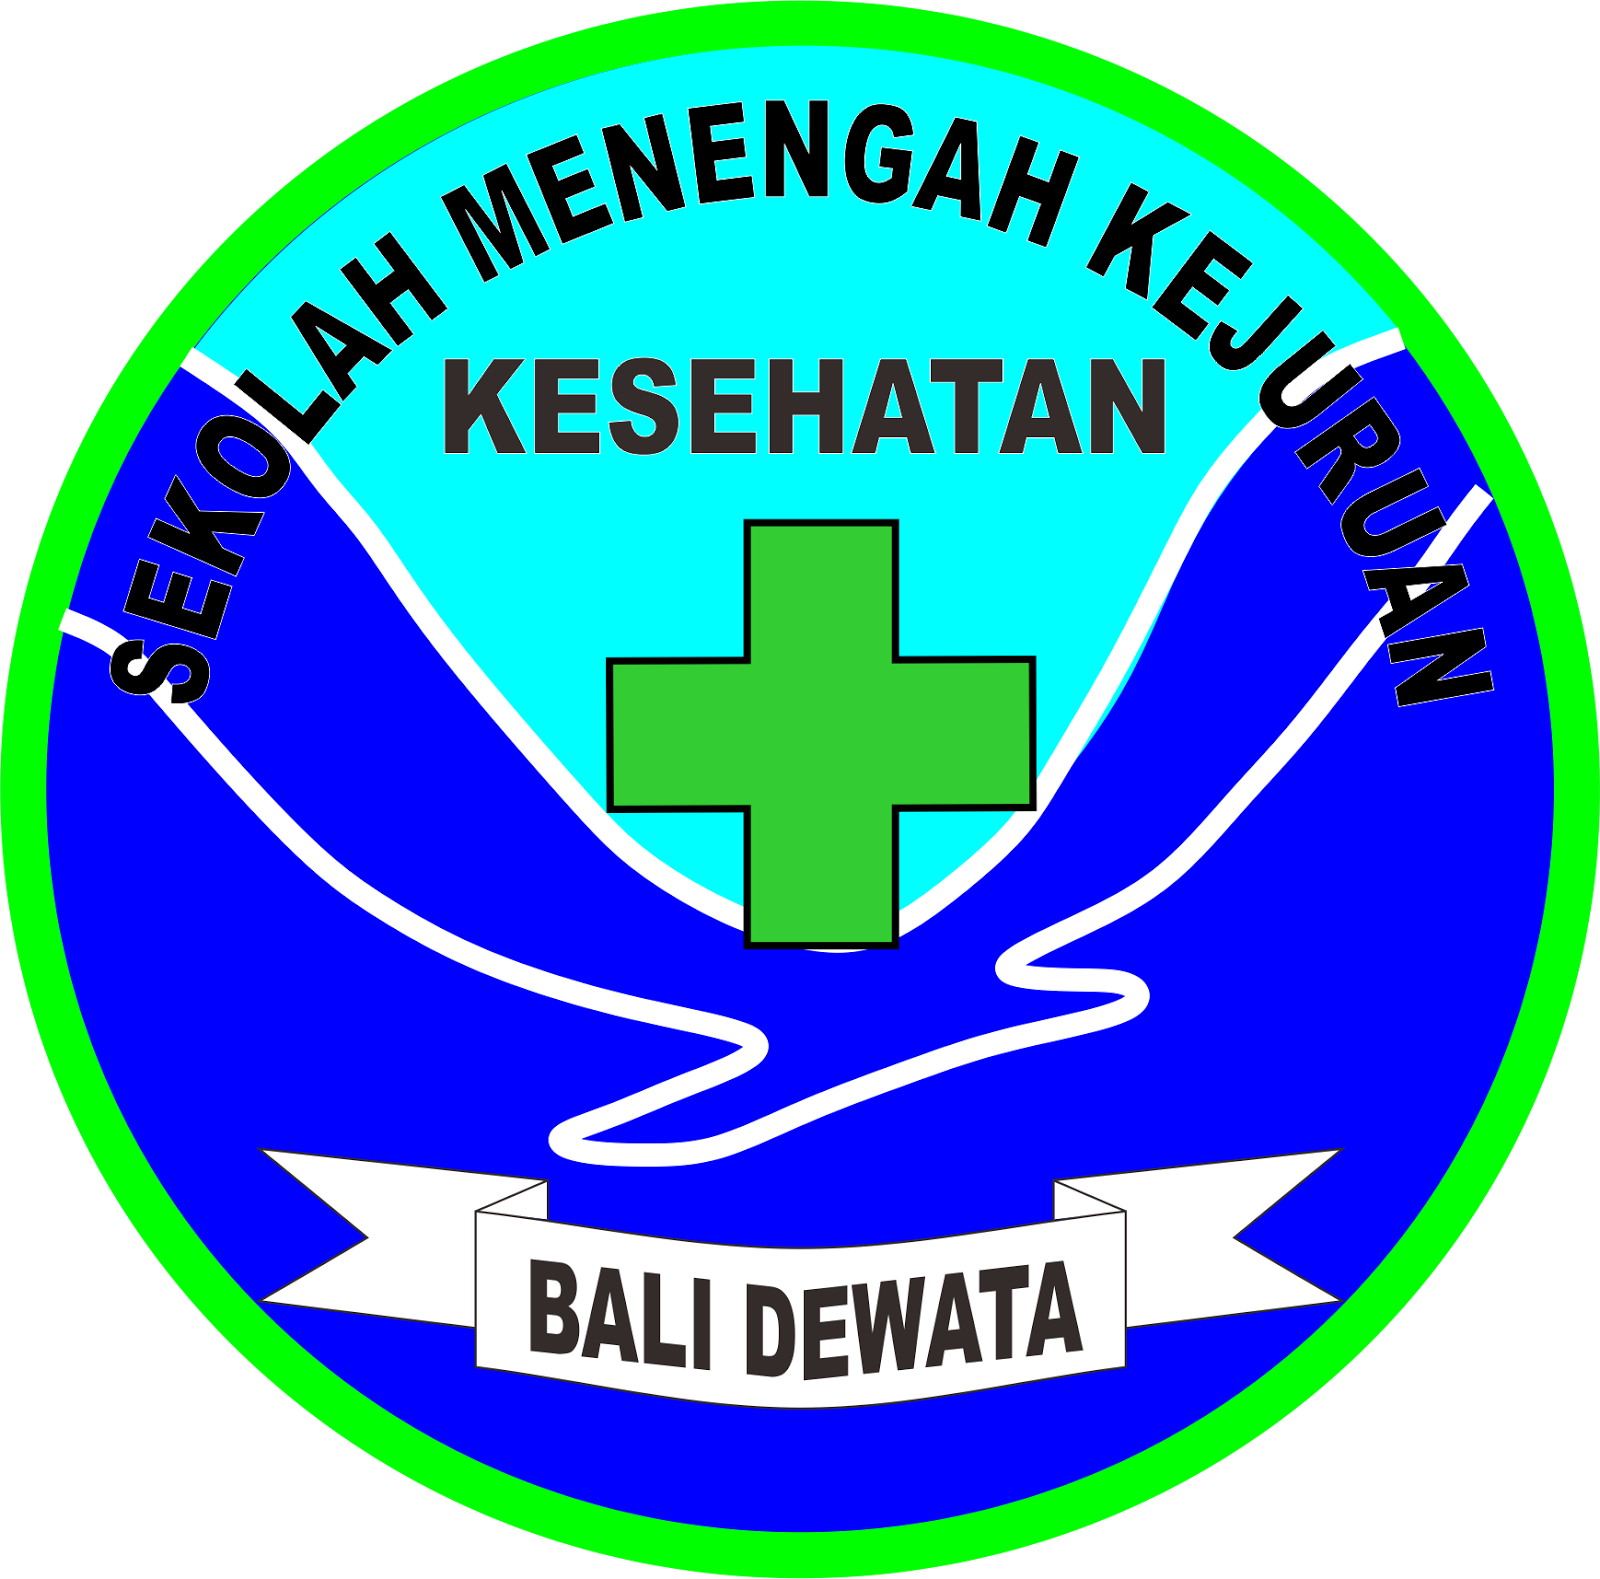 Mr ERICK: Logo SMK Kesehatan Bali Dewata